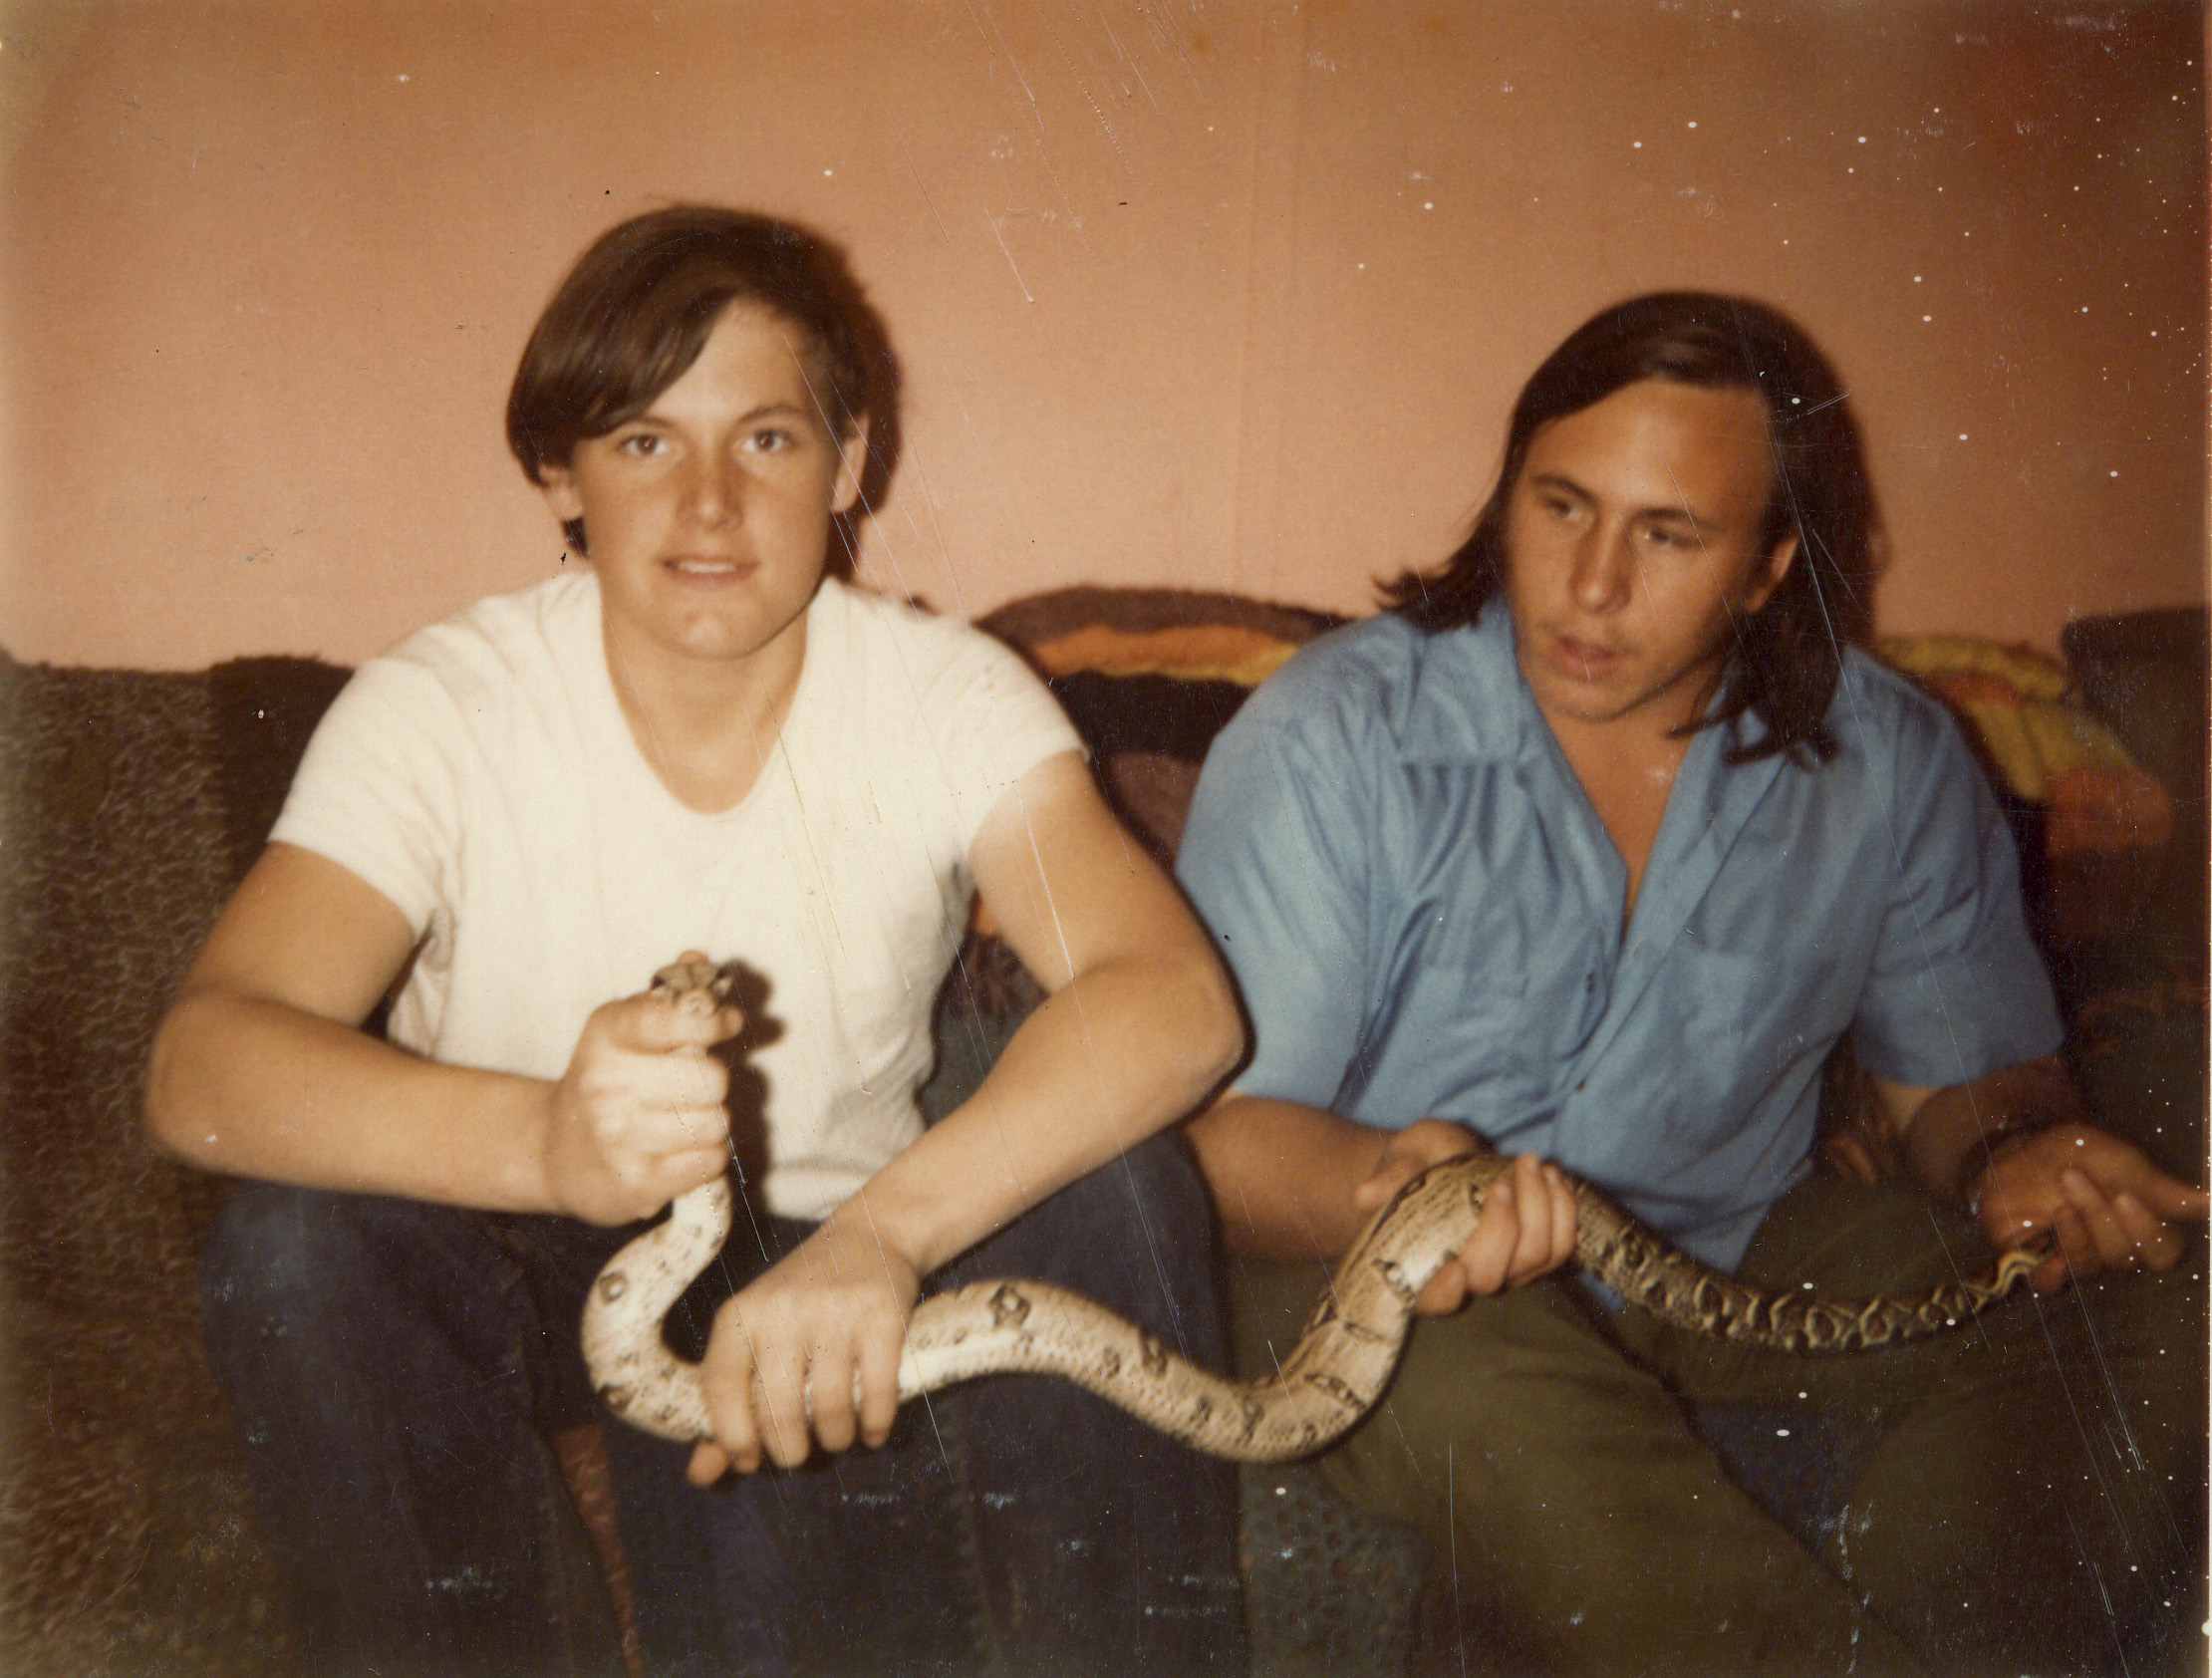 Chris Baptista and George George Bradley with boa. Prescott, AZ, ca 1974. Photo by Elizabeth Baptista.